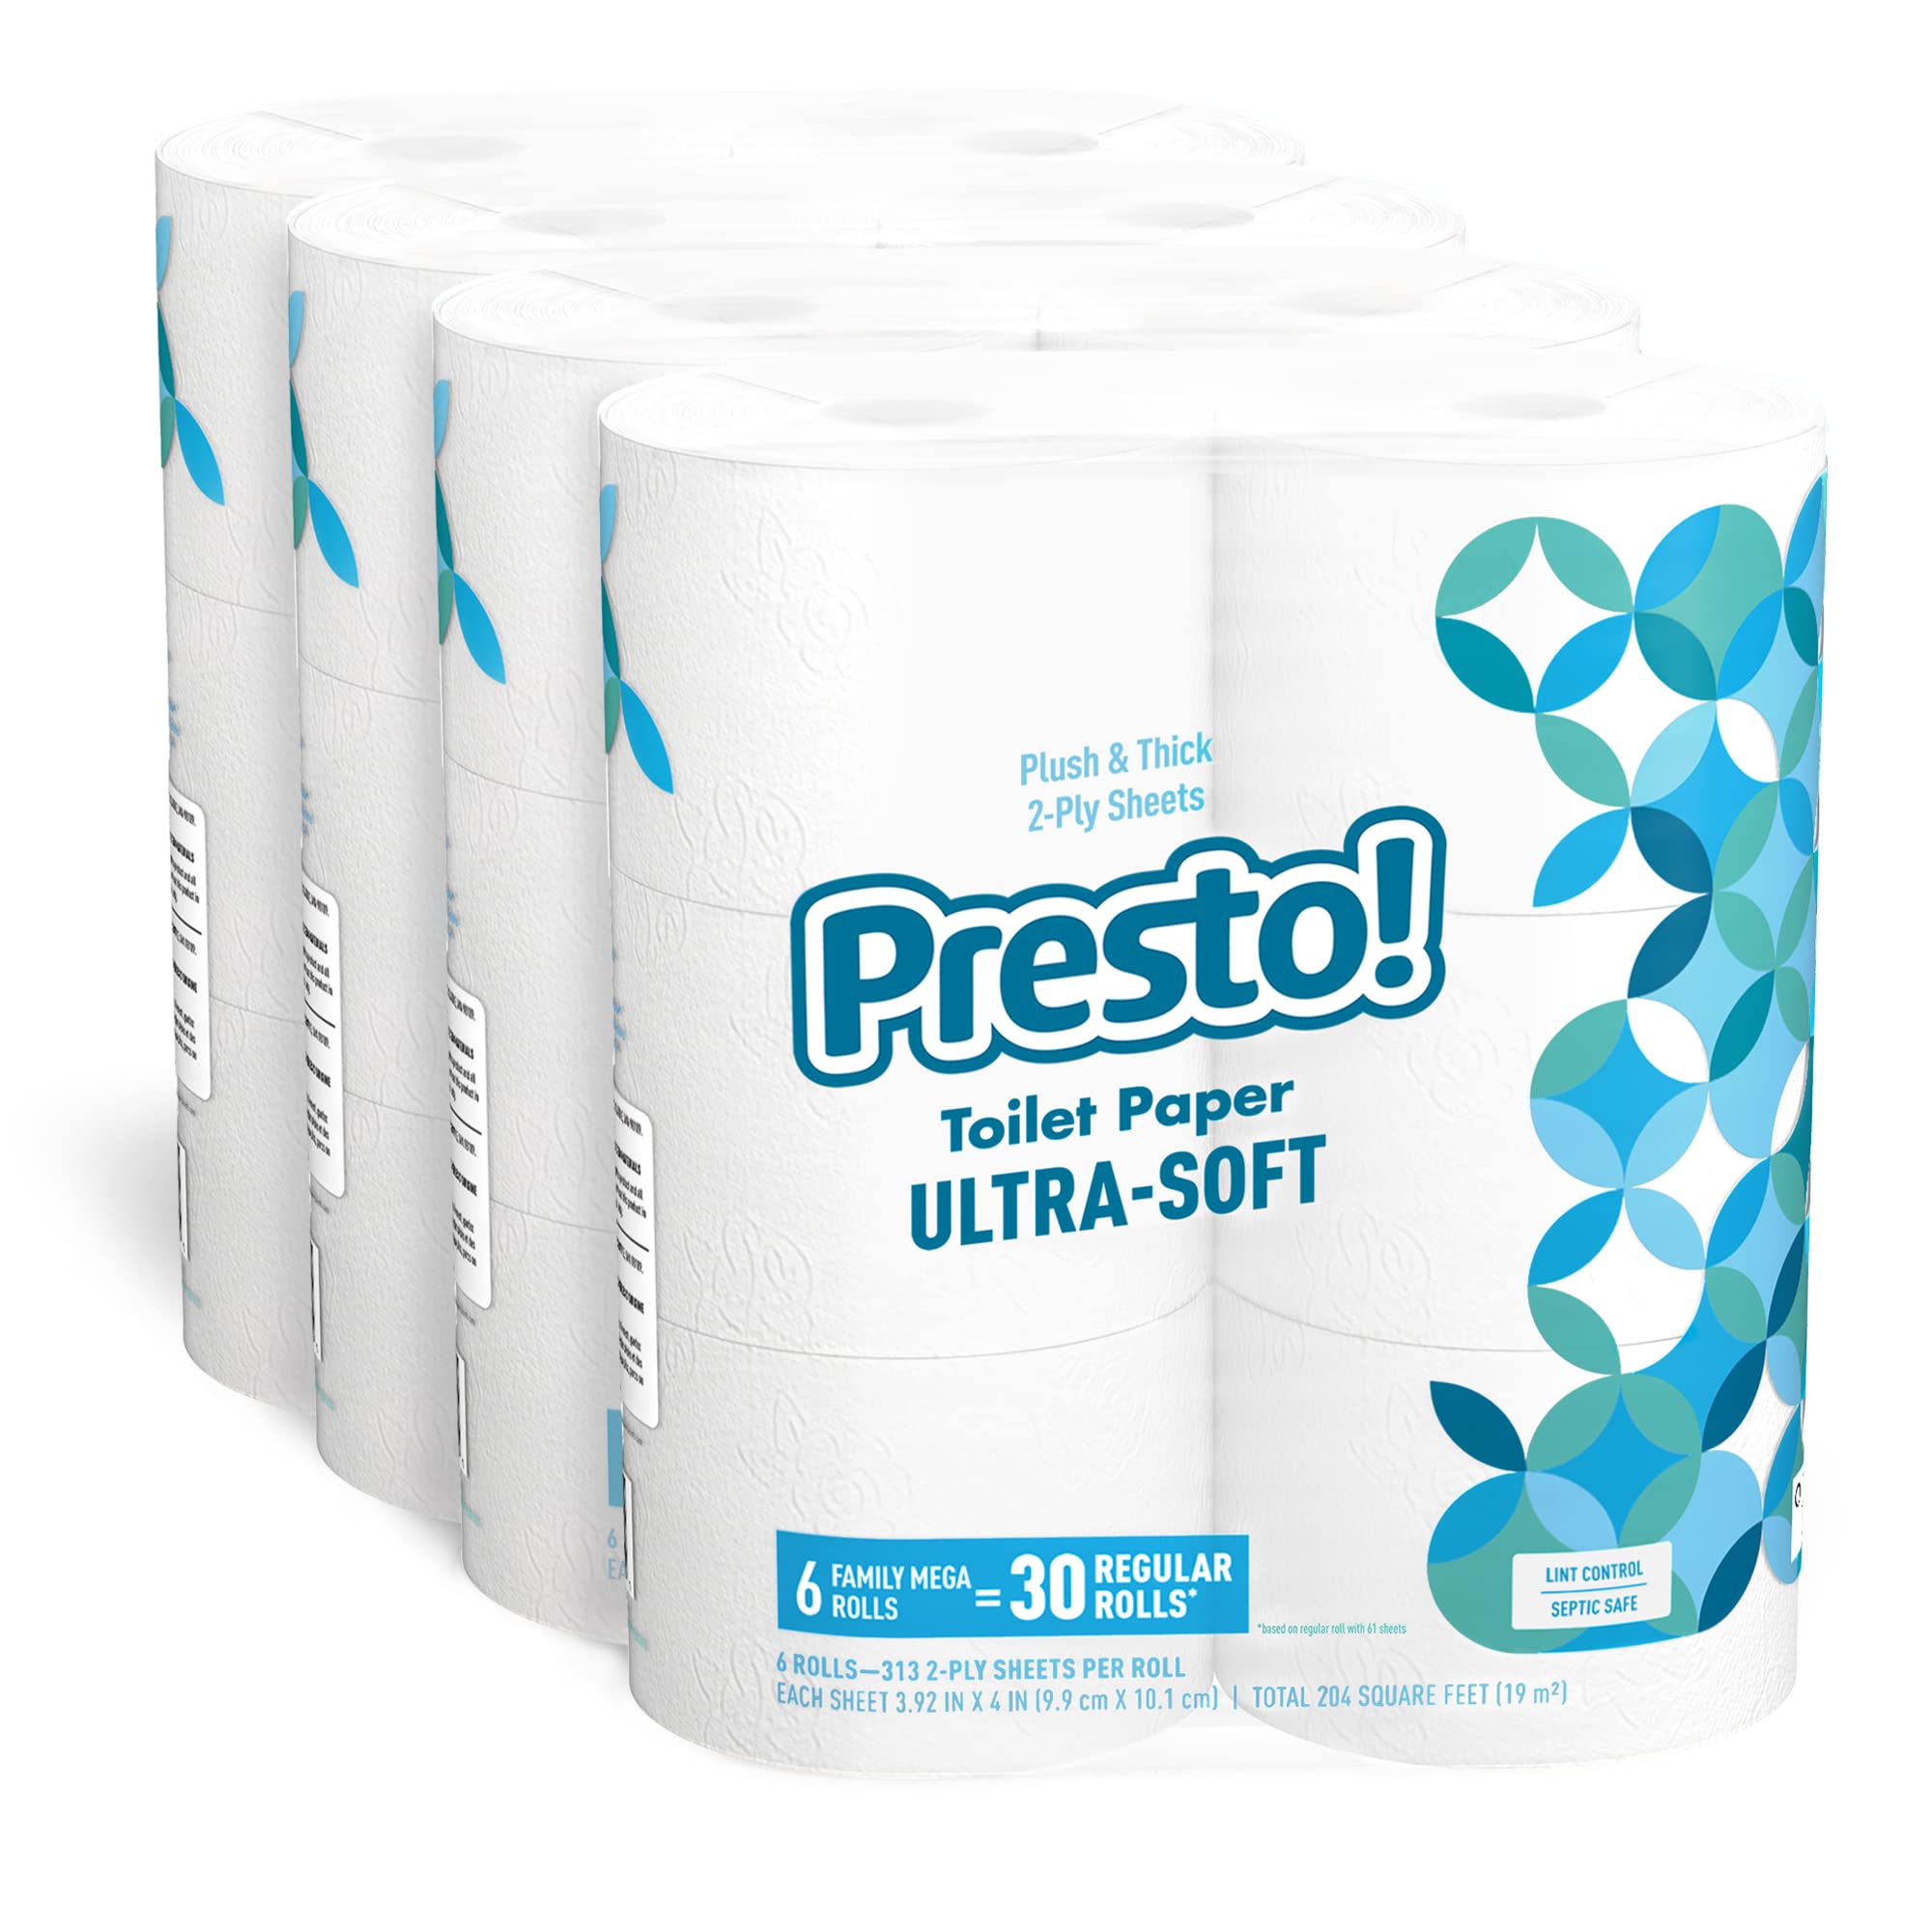 $18.06: Amazon Brand - Presto! 2-Ply Toilet Paper, Ultra-Soft, Unscented, 24 Rolls (Prime Members)